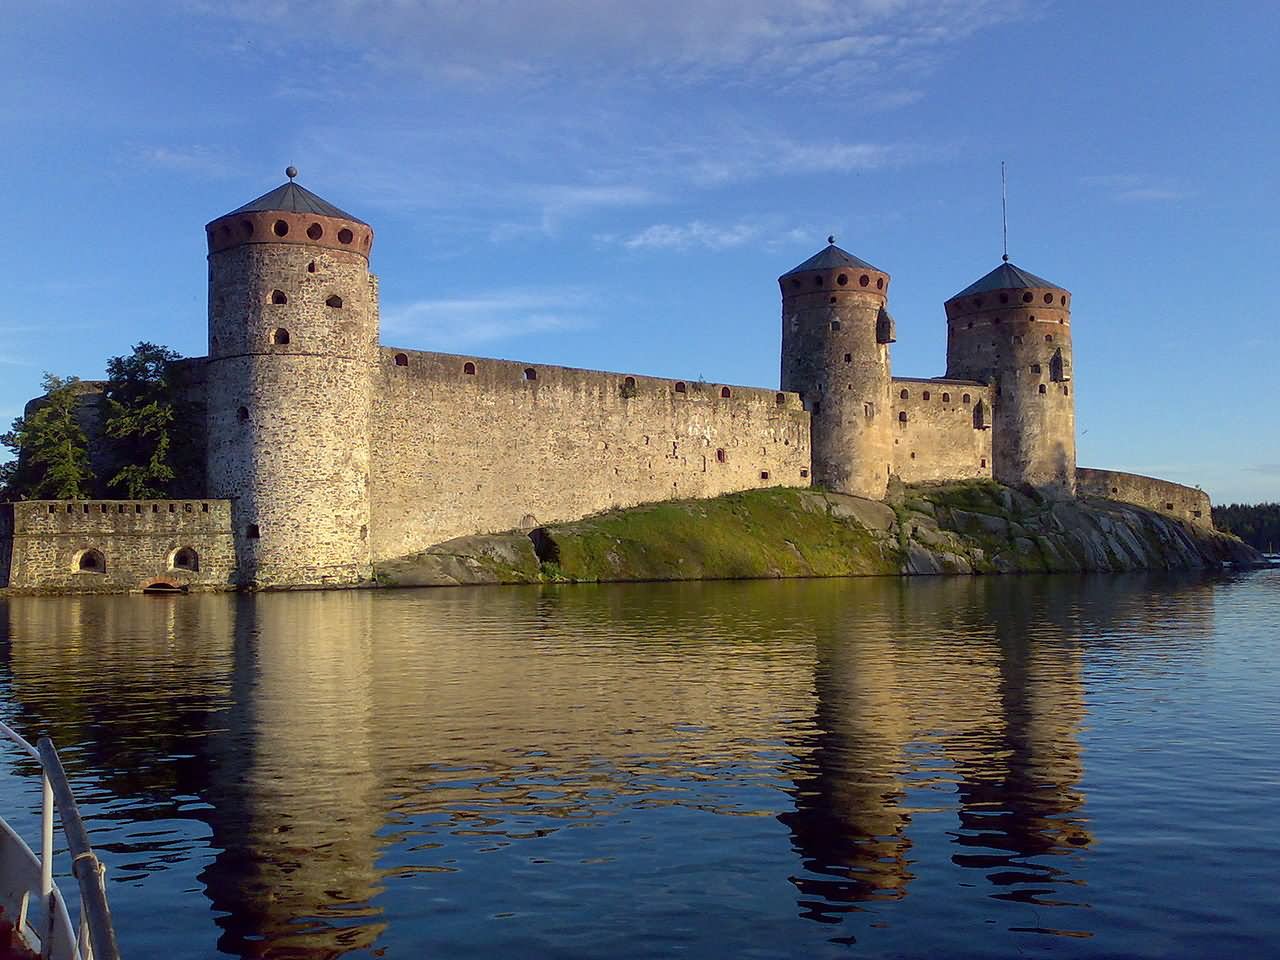 Water Reflection Of The Olavinlinna Castle